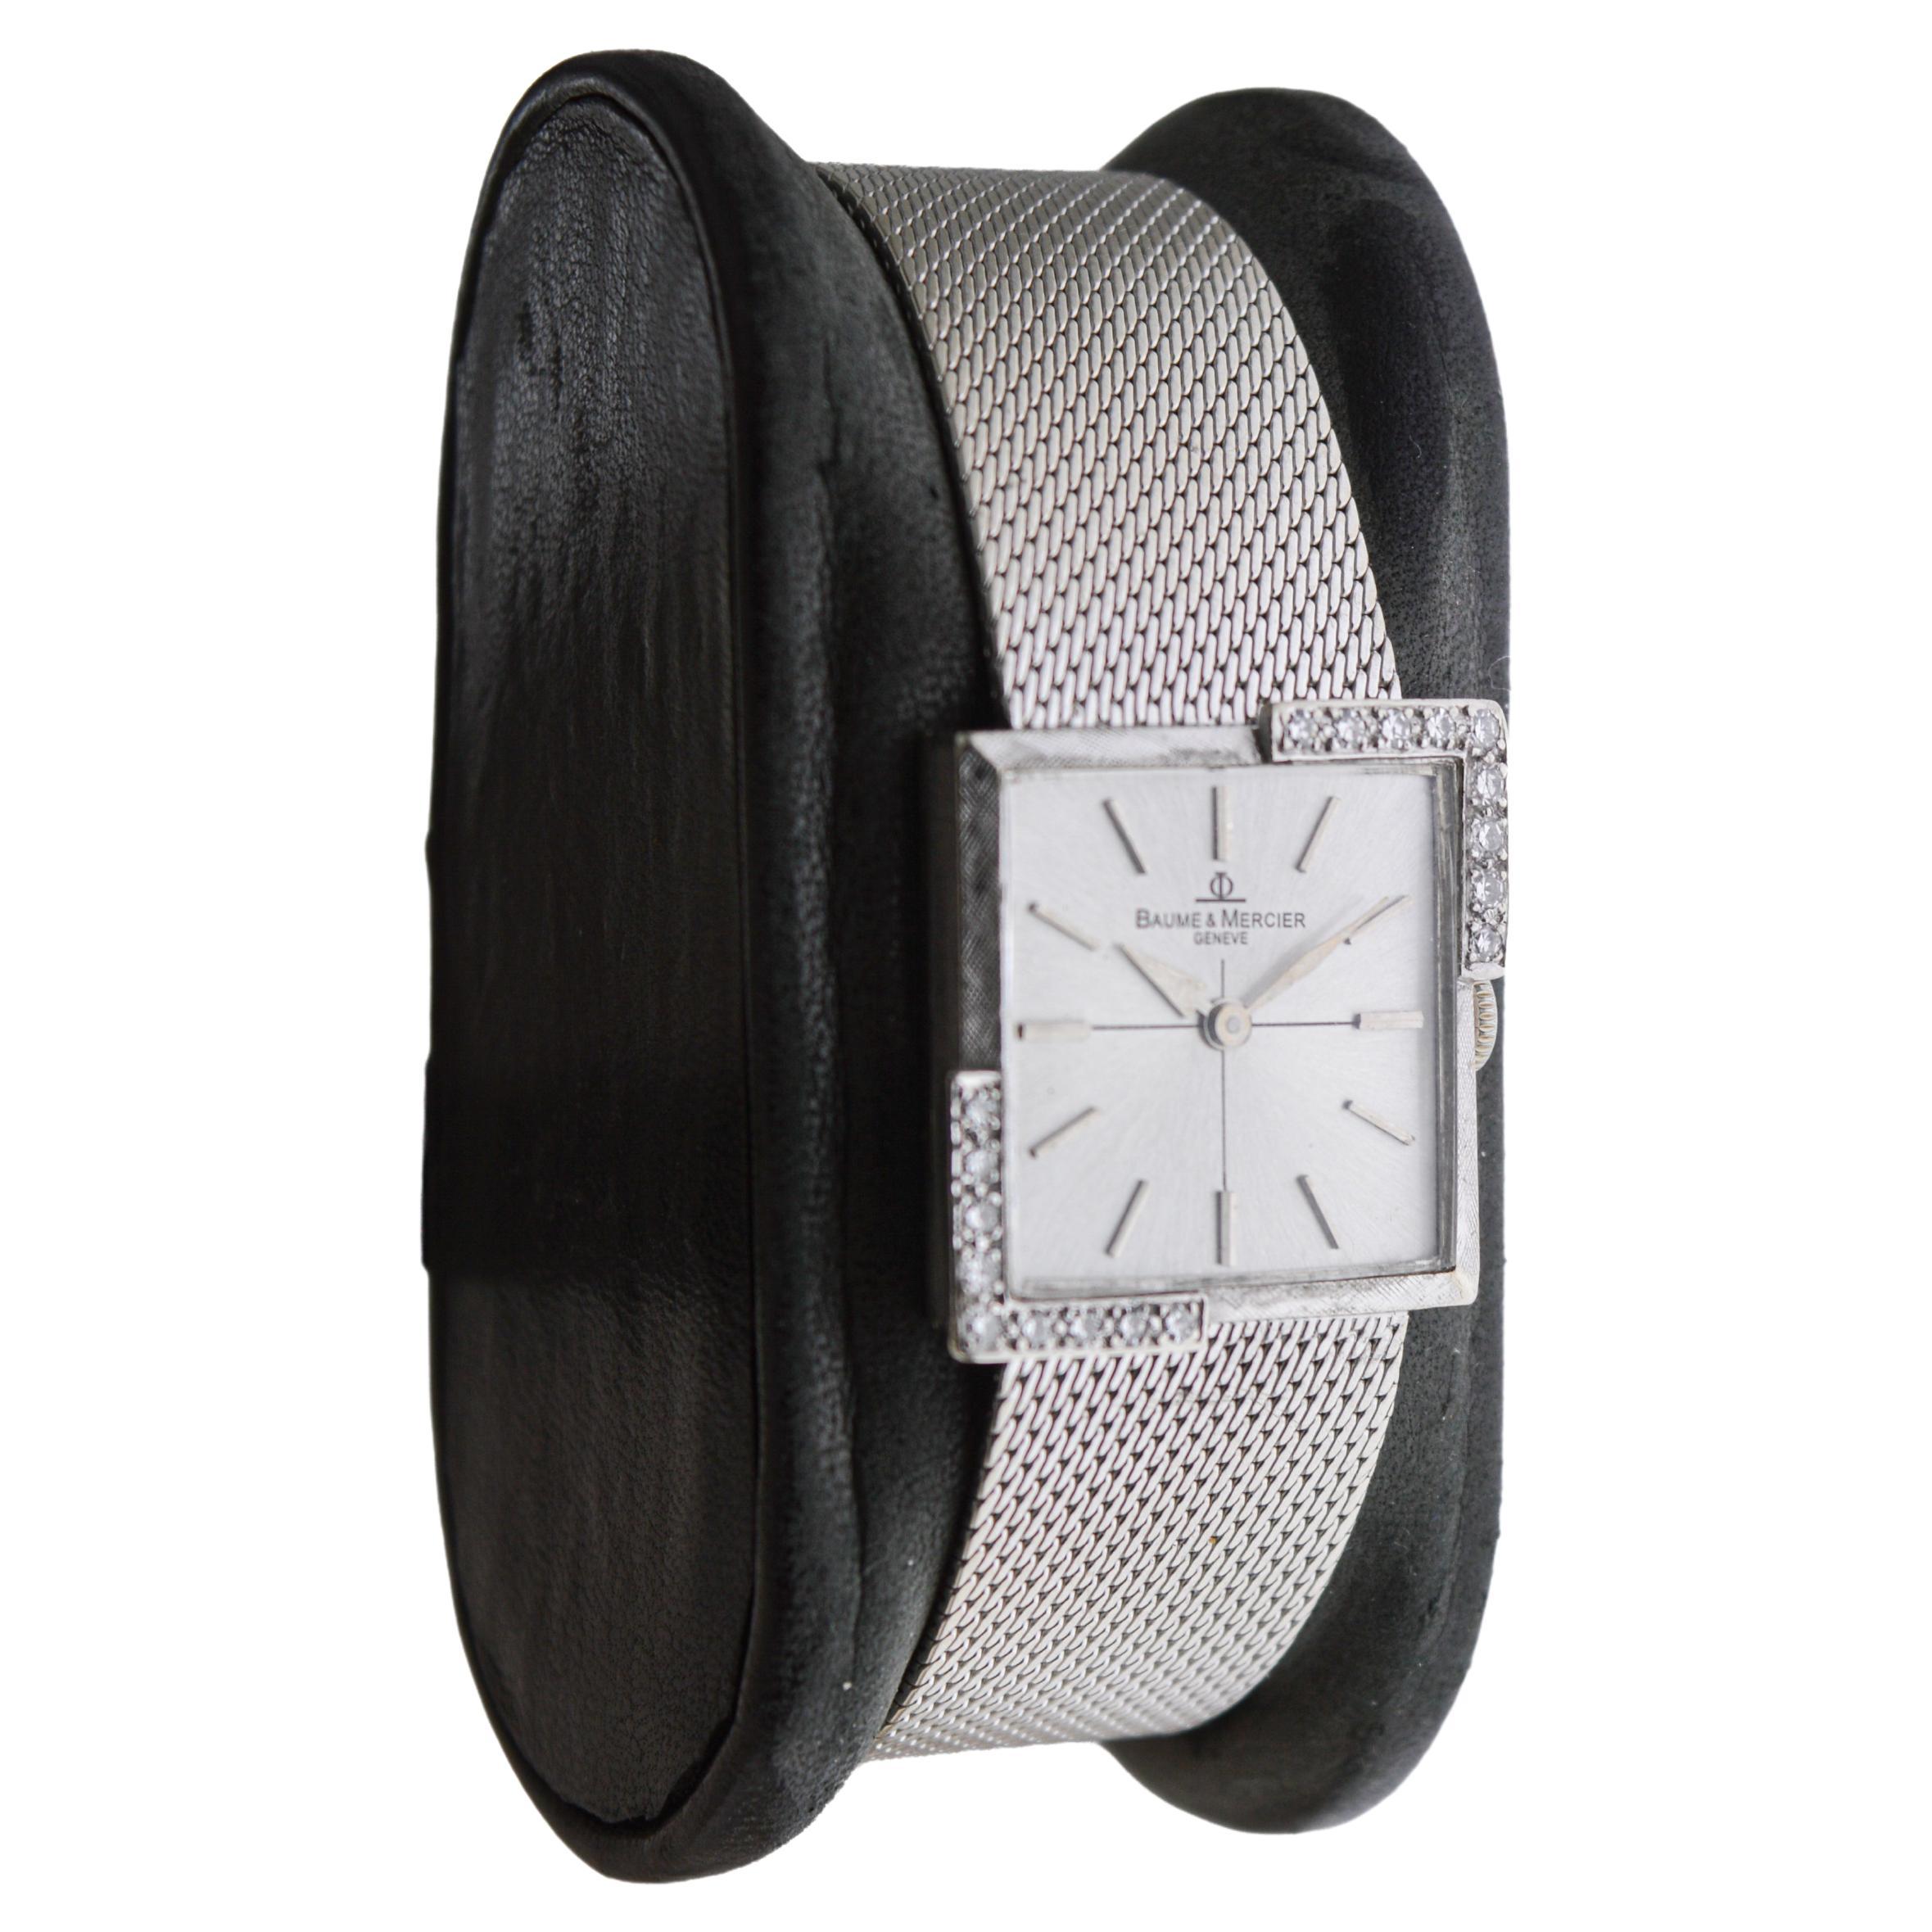 Art Deco Baume Mercier 14Kt. Solid White Gold Bracelet Watch with For Sale